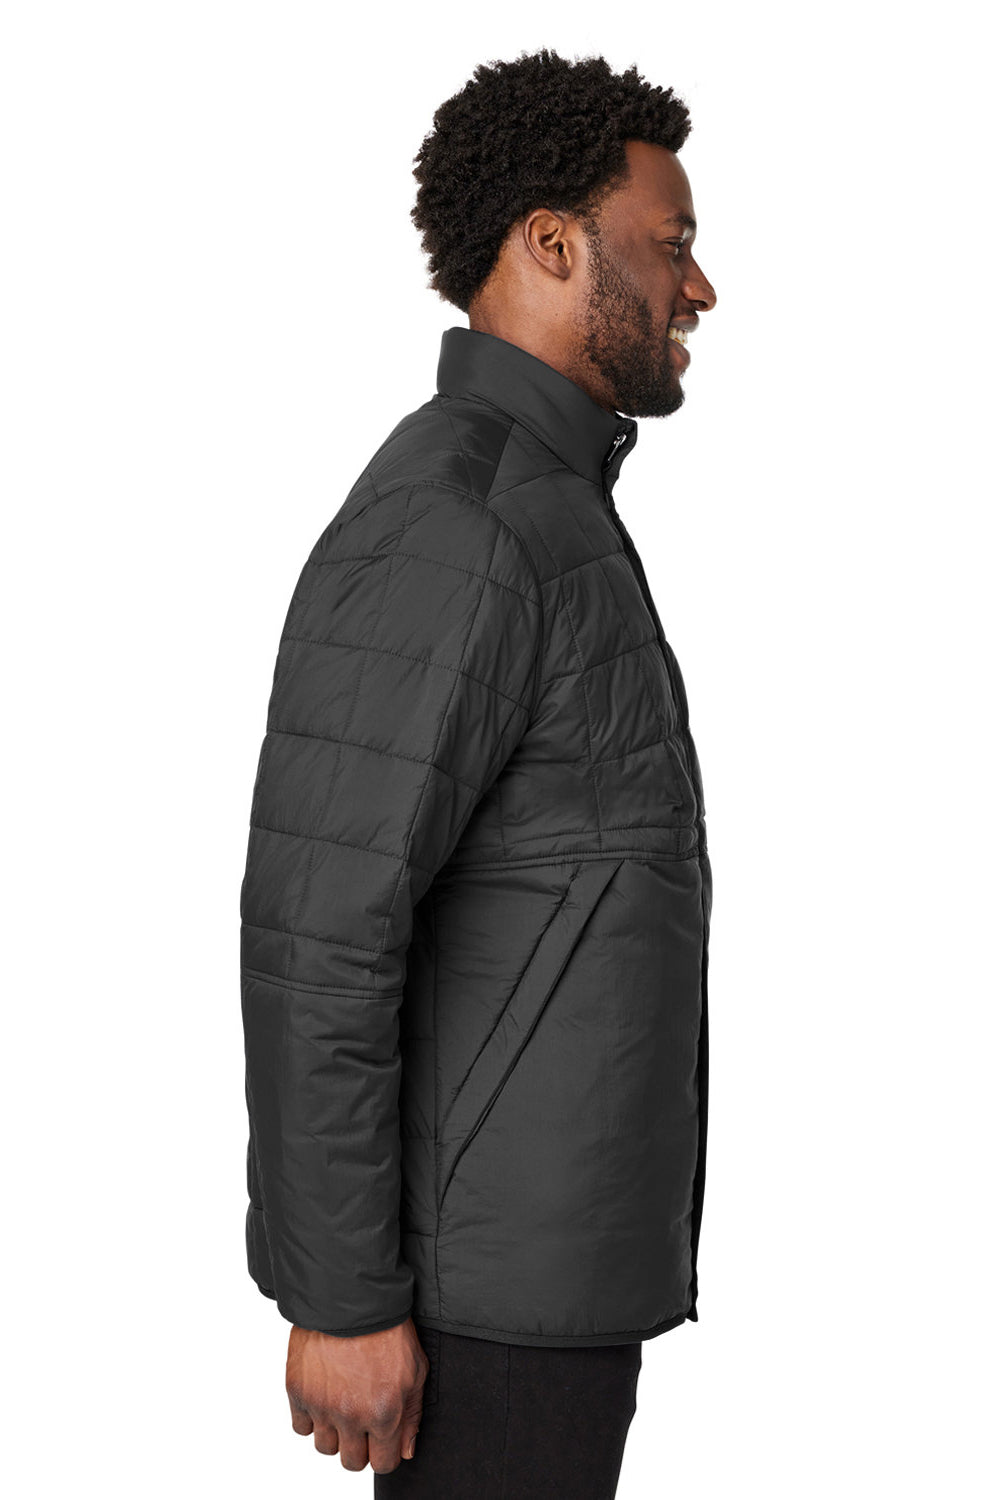 North End NE721 Mens Aura Fleece Lined Full Zip Jacket Black Side